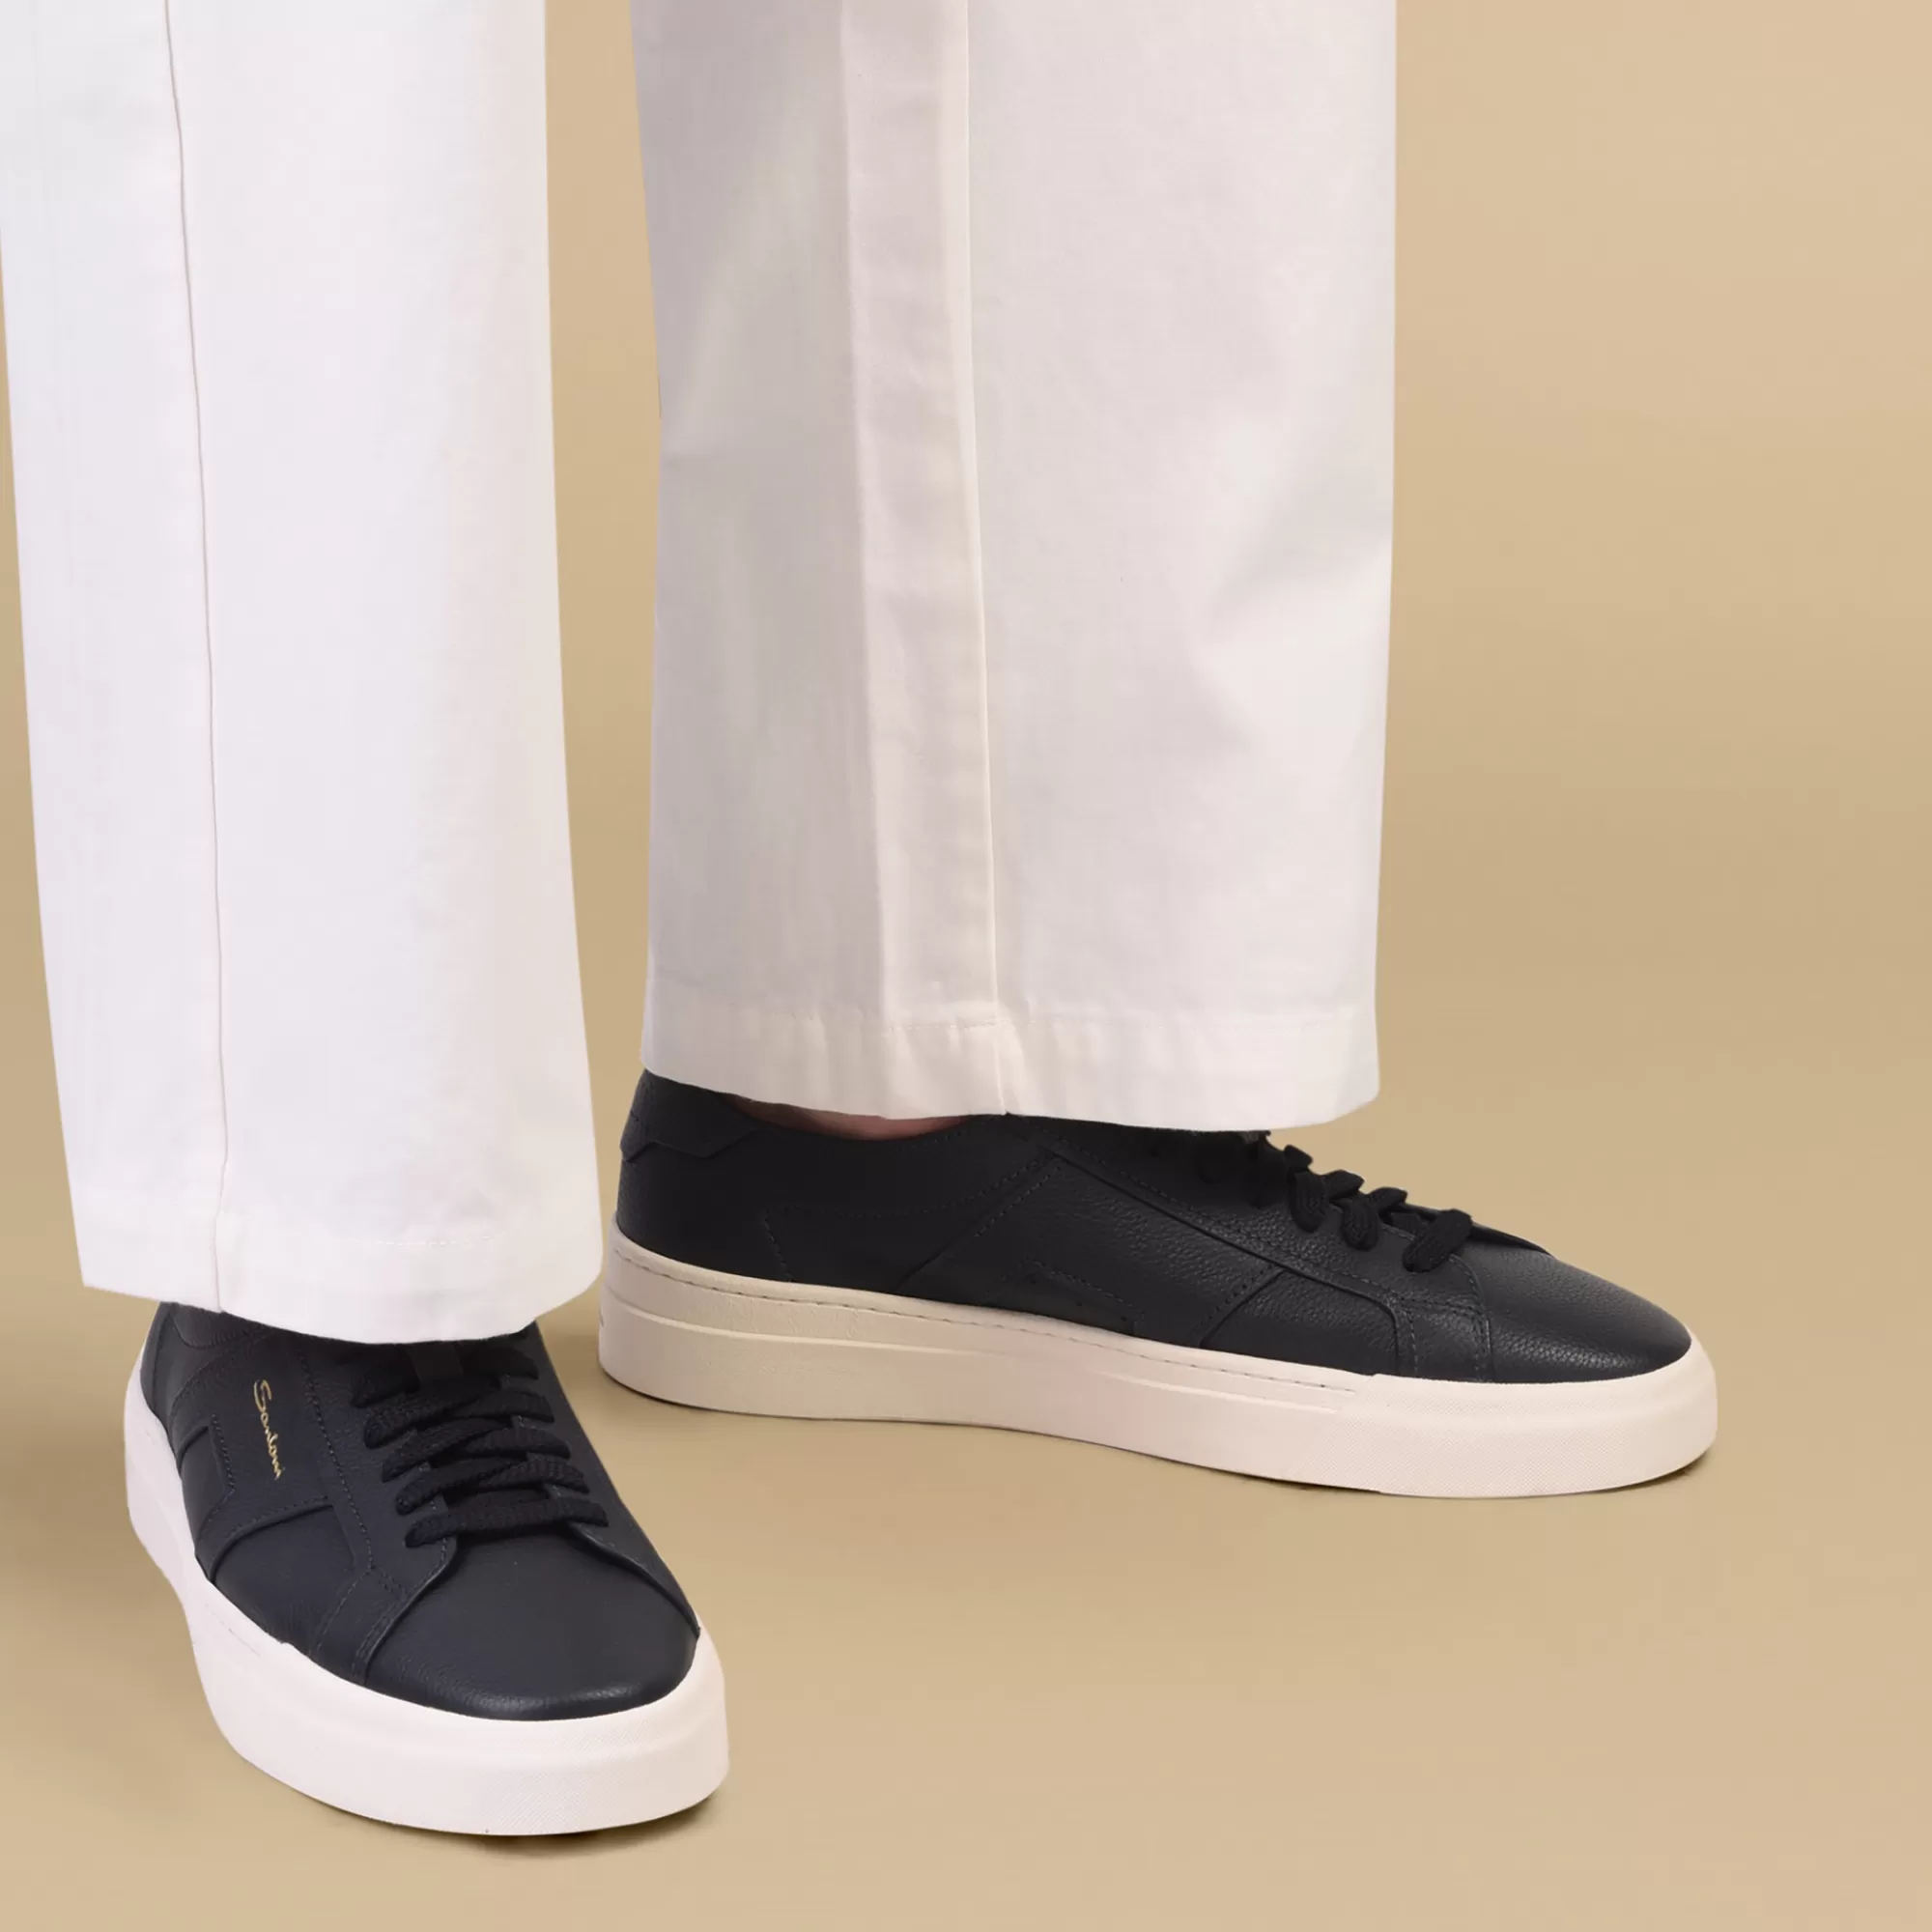 Shop Double buckle sneaker da uomo in pelle bottalata blu Vedi tutte le calzature | Sneakers